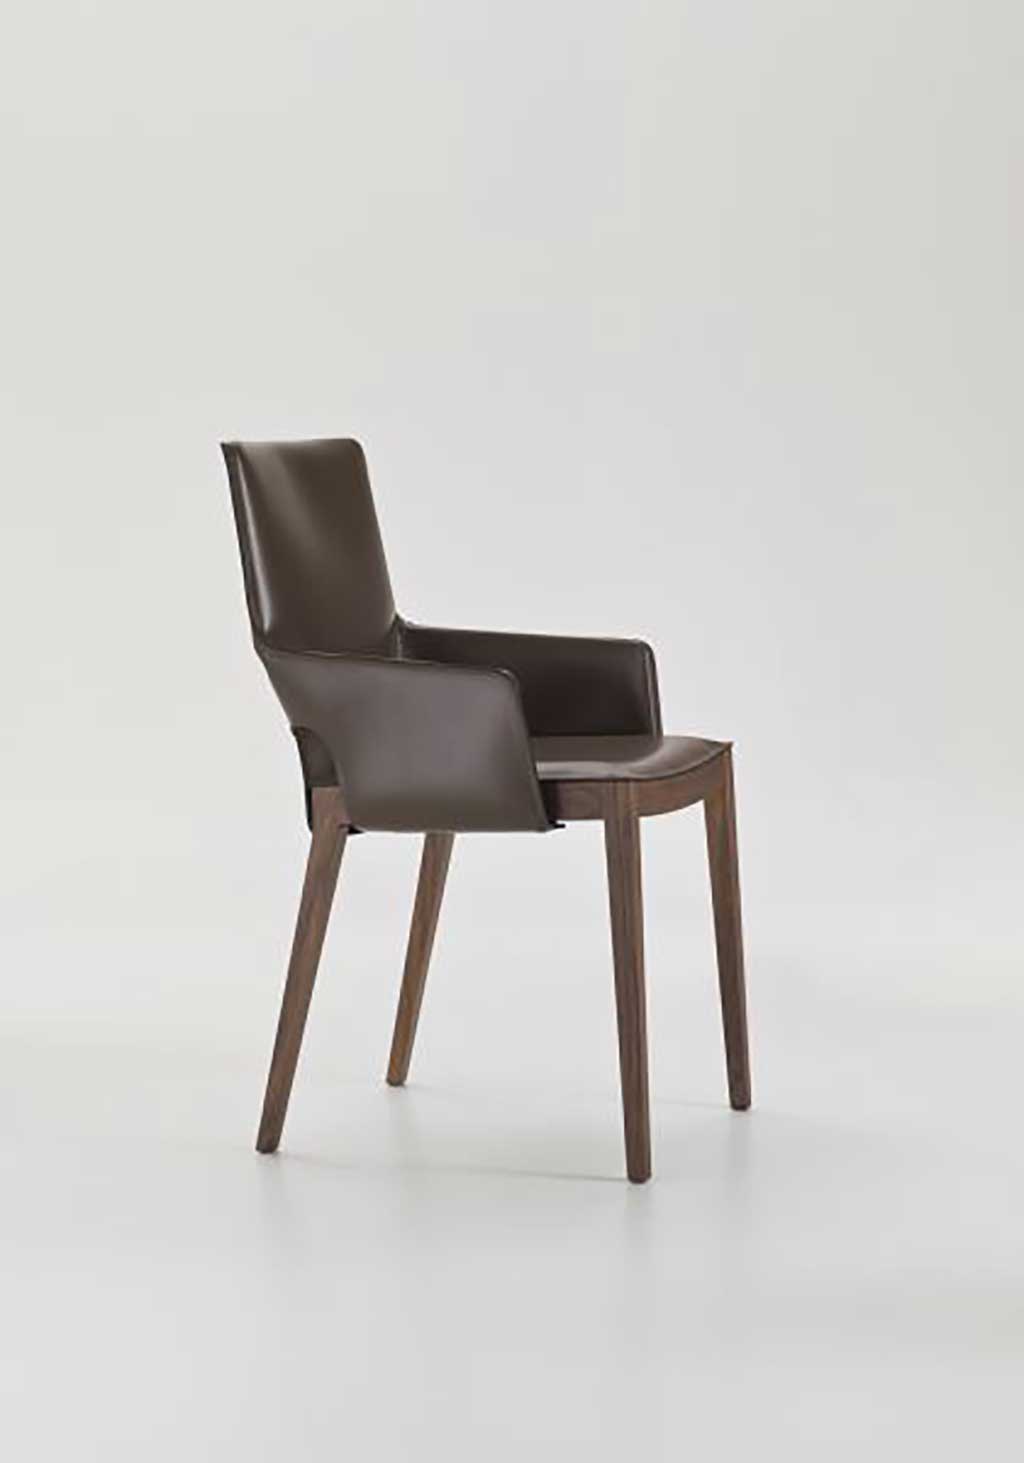 Shu Dining Chair - FLOOR MODEL